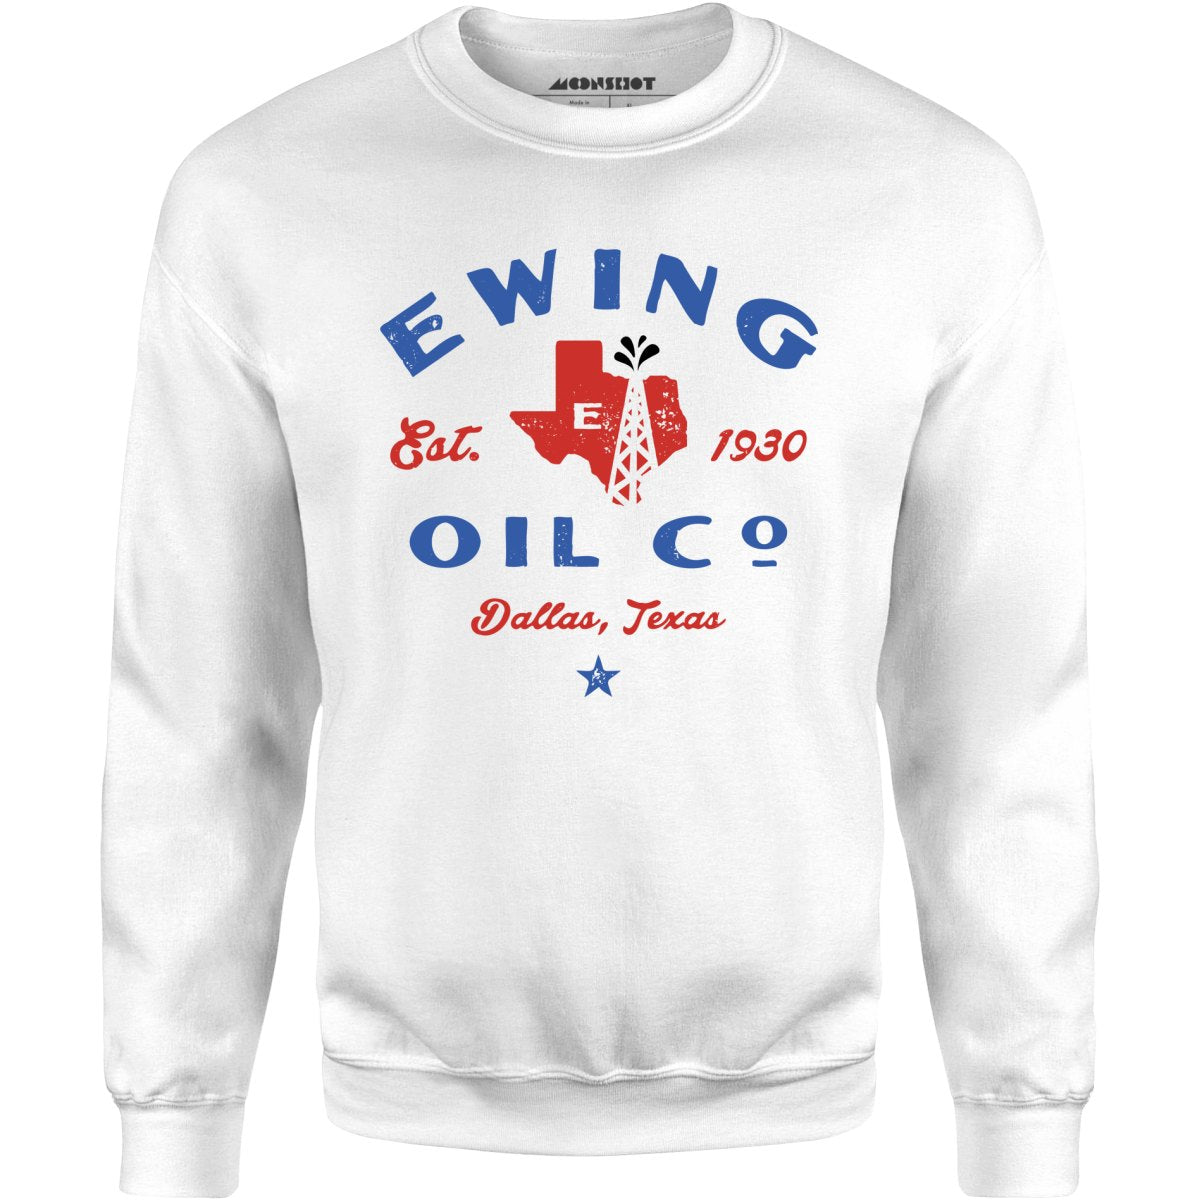 Ewing Oil Co - Dallas, Texas - Unisex Sweatshirt